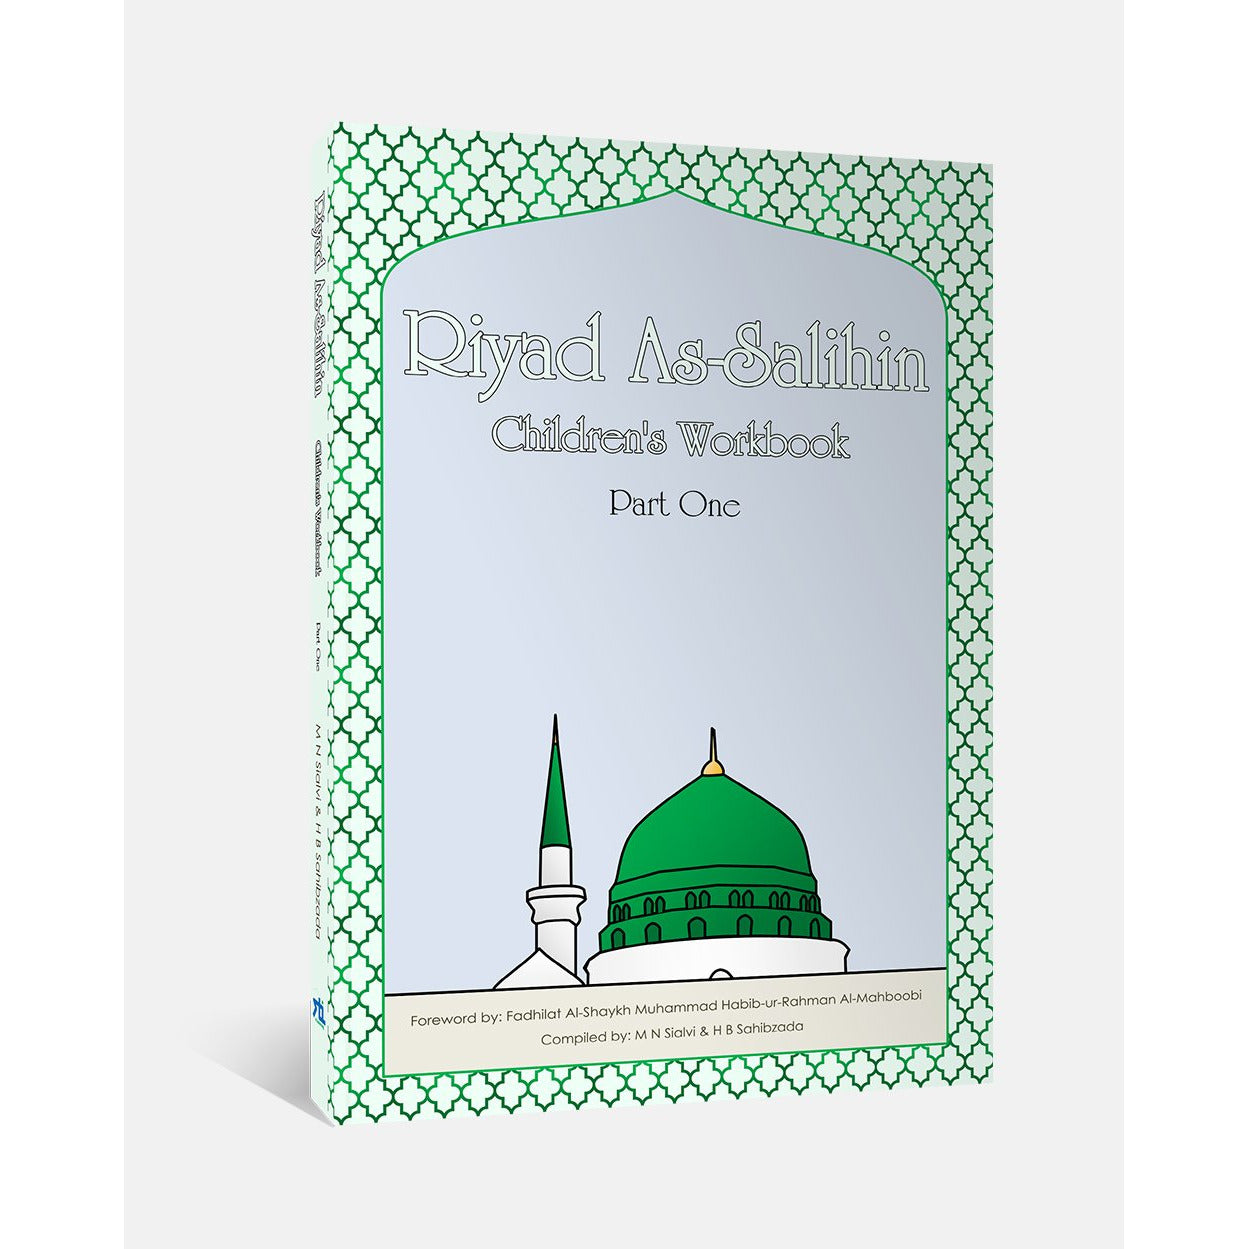 Warehouse Clearance: Riyad As-Salihin - Children's Workbook (Cover Slightly Bent)